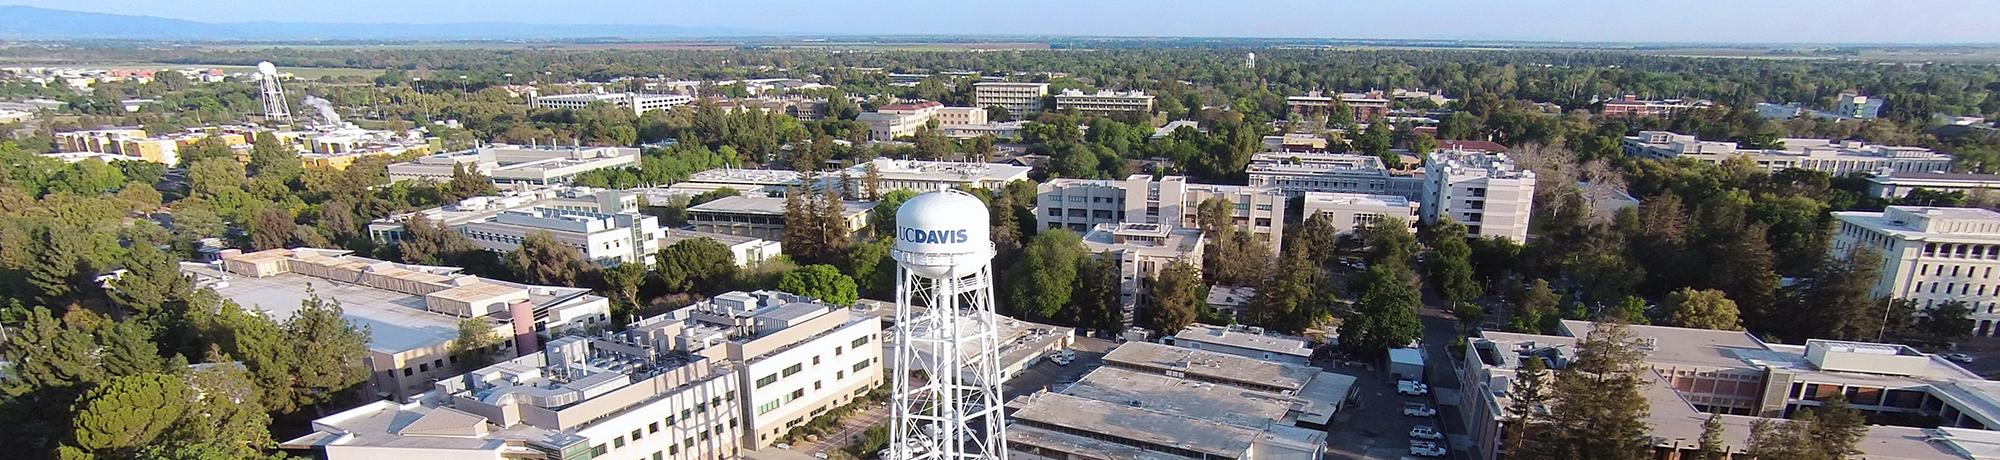 Panoramic image of UC Davis campus.